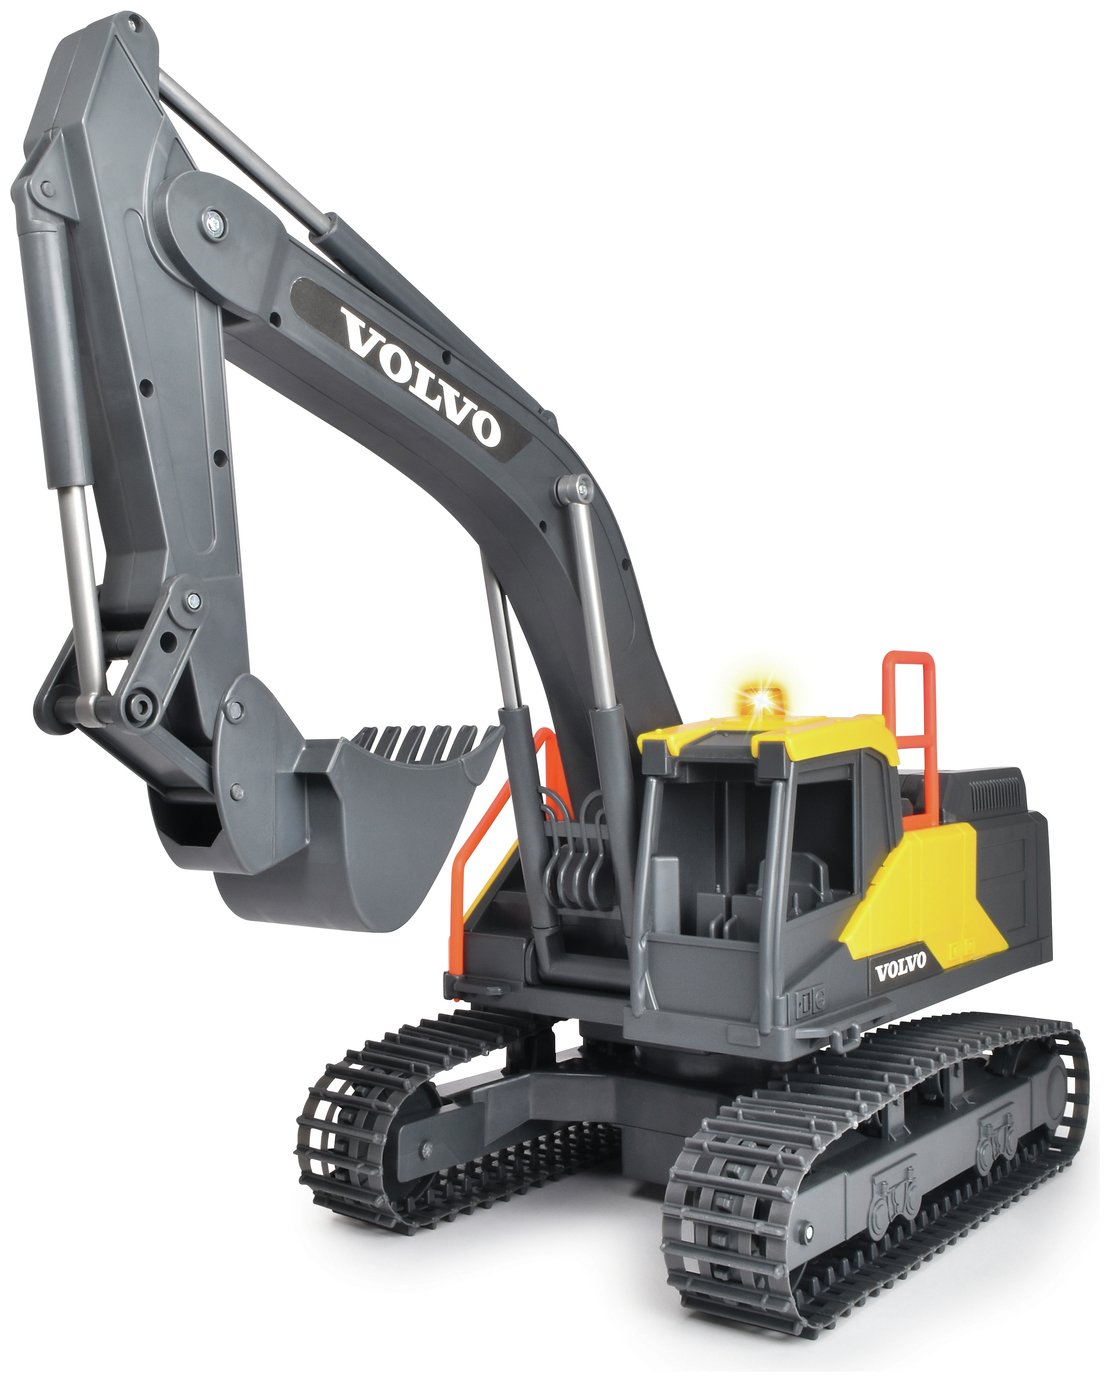 Volvo Mining Remote Control Excavator review